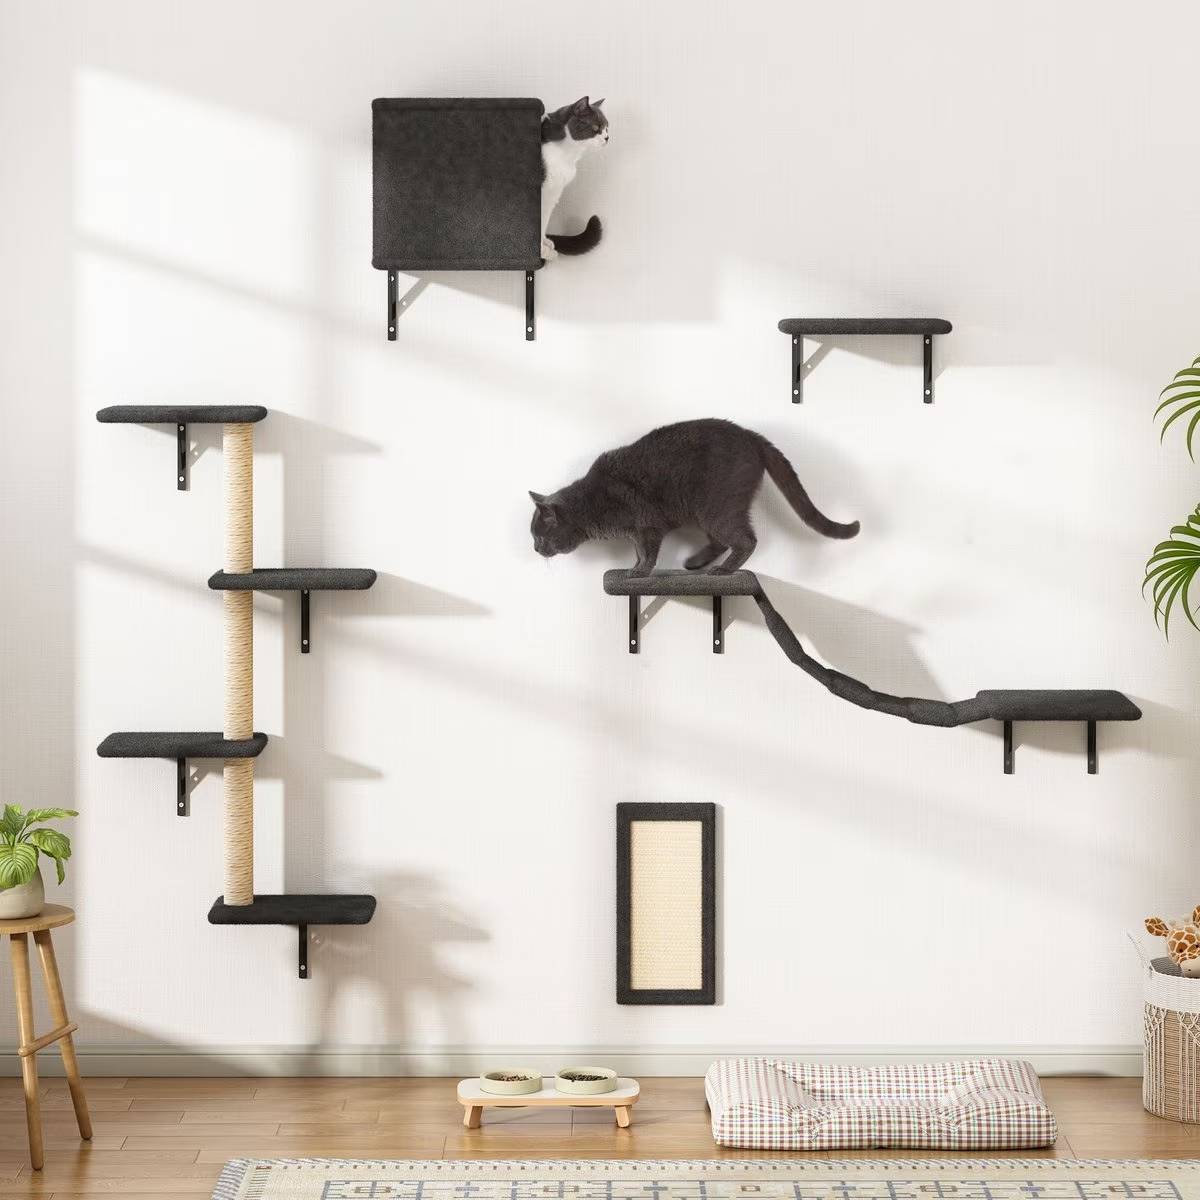 Coziwow Wall Mounted Shelves Set Cat Tree